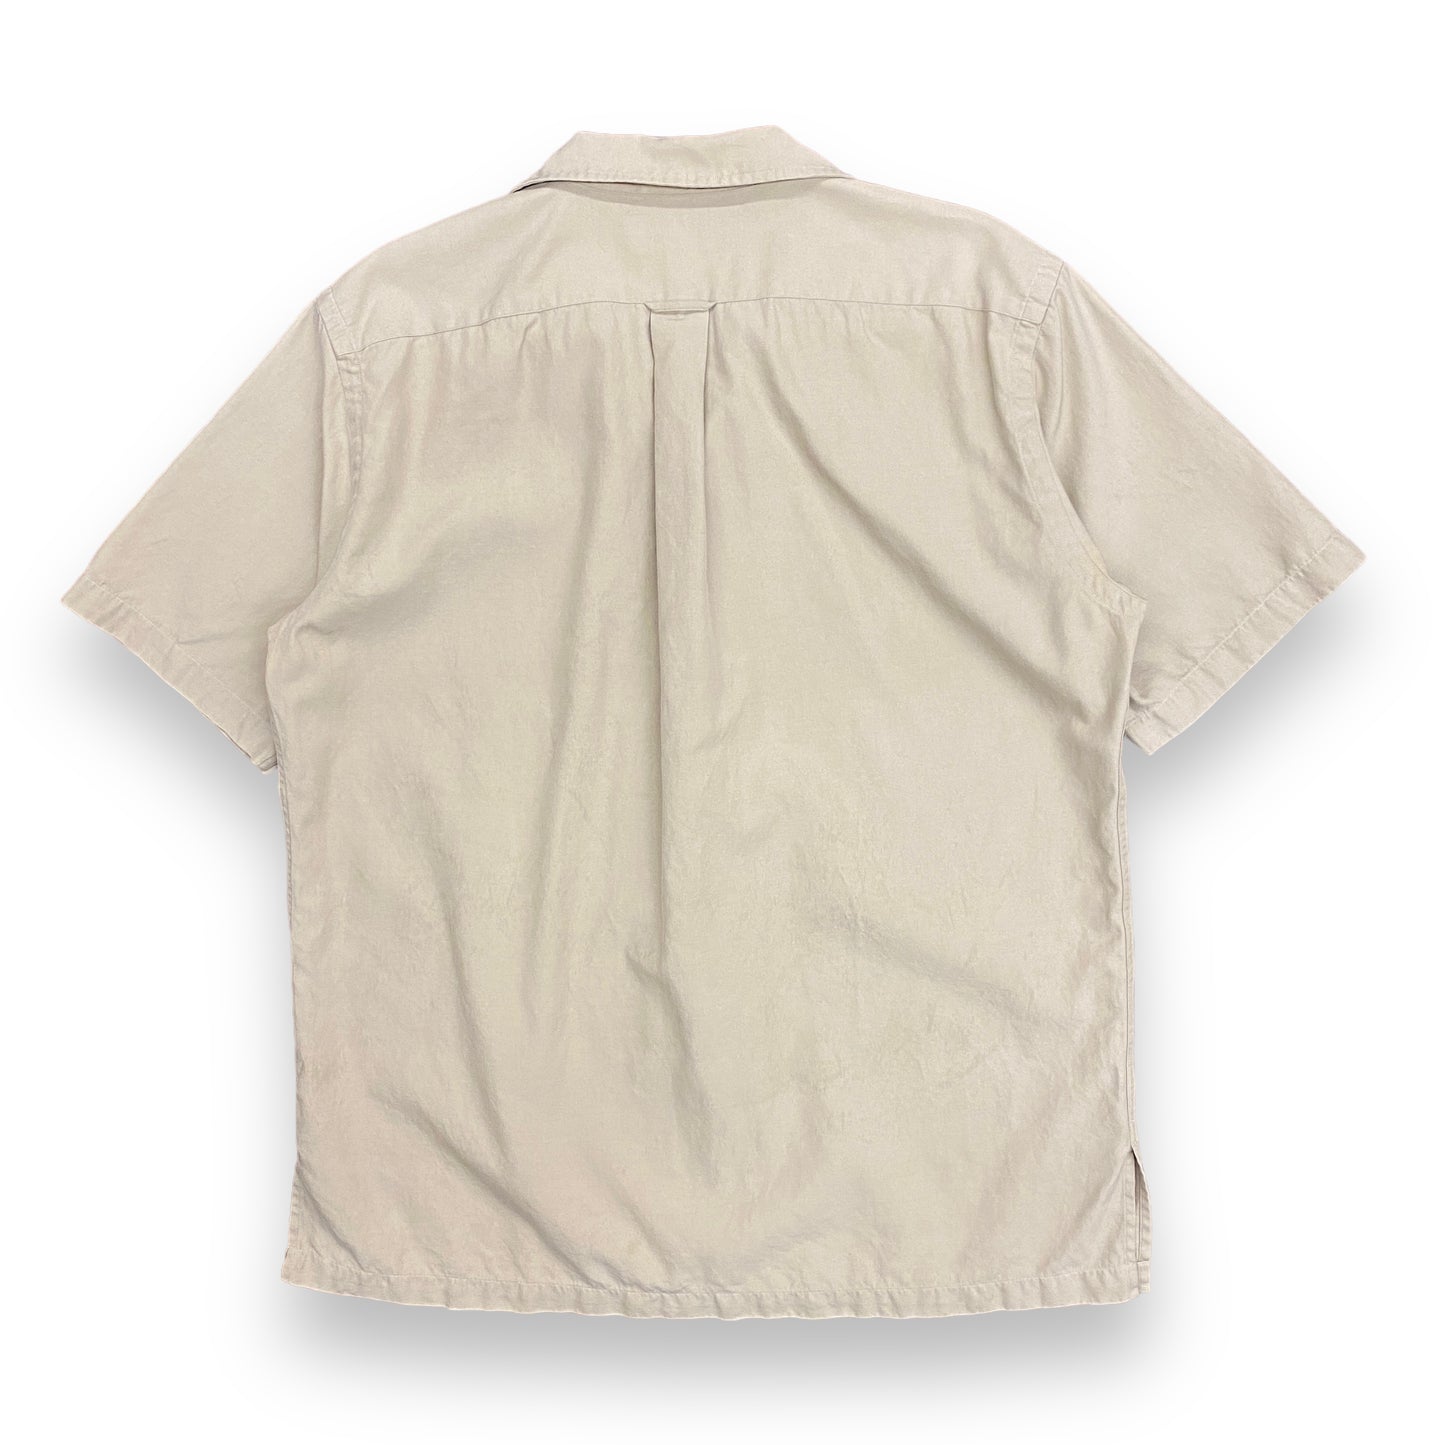 Polo Ralph Lauren Caldwell Loop Collar Tan Shirt - Size Medium